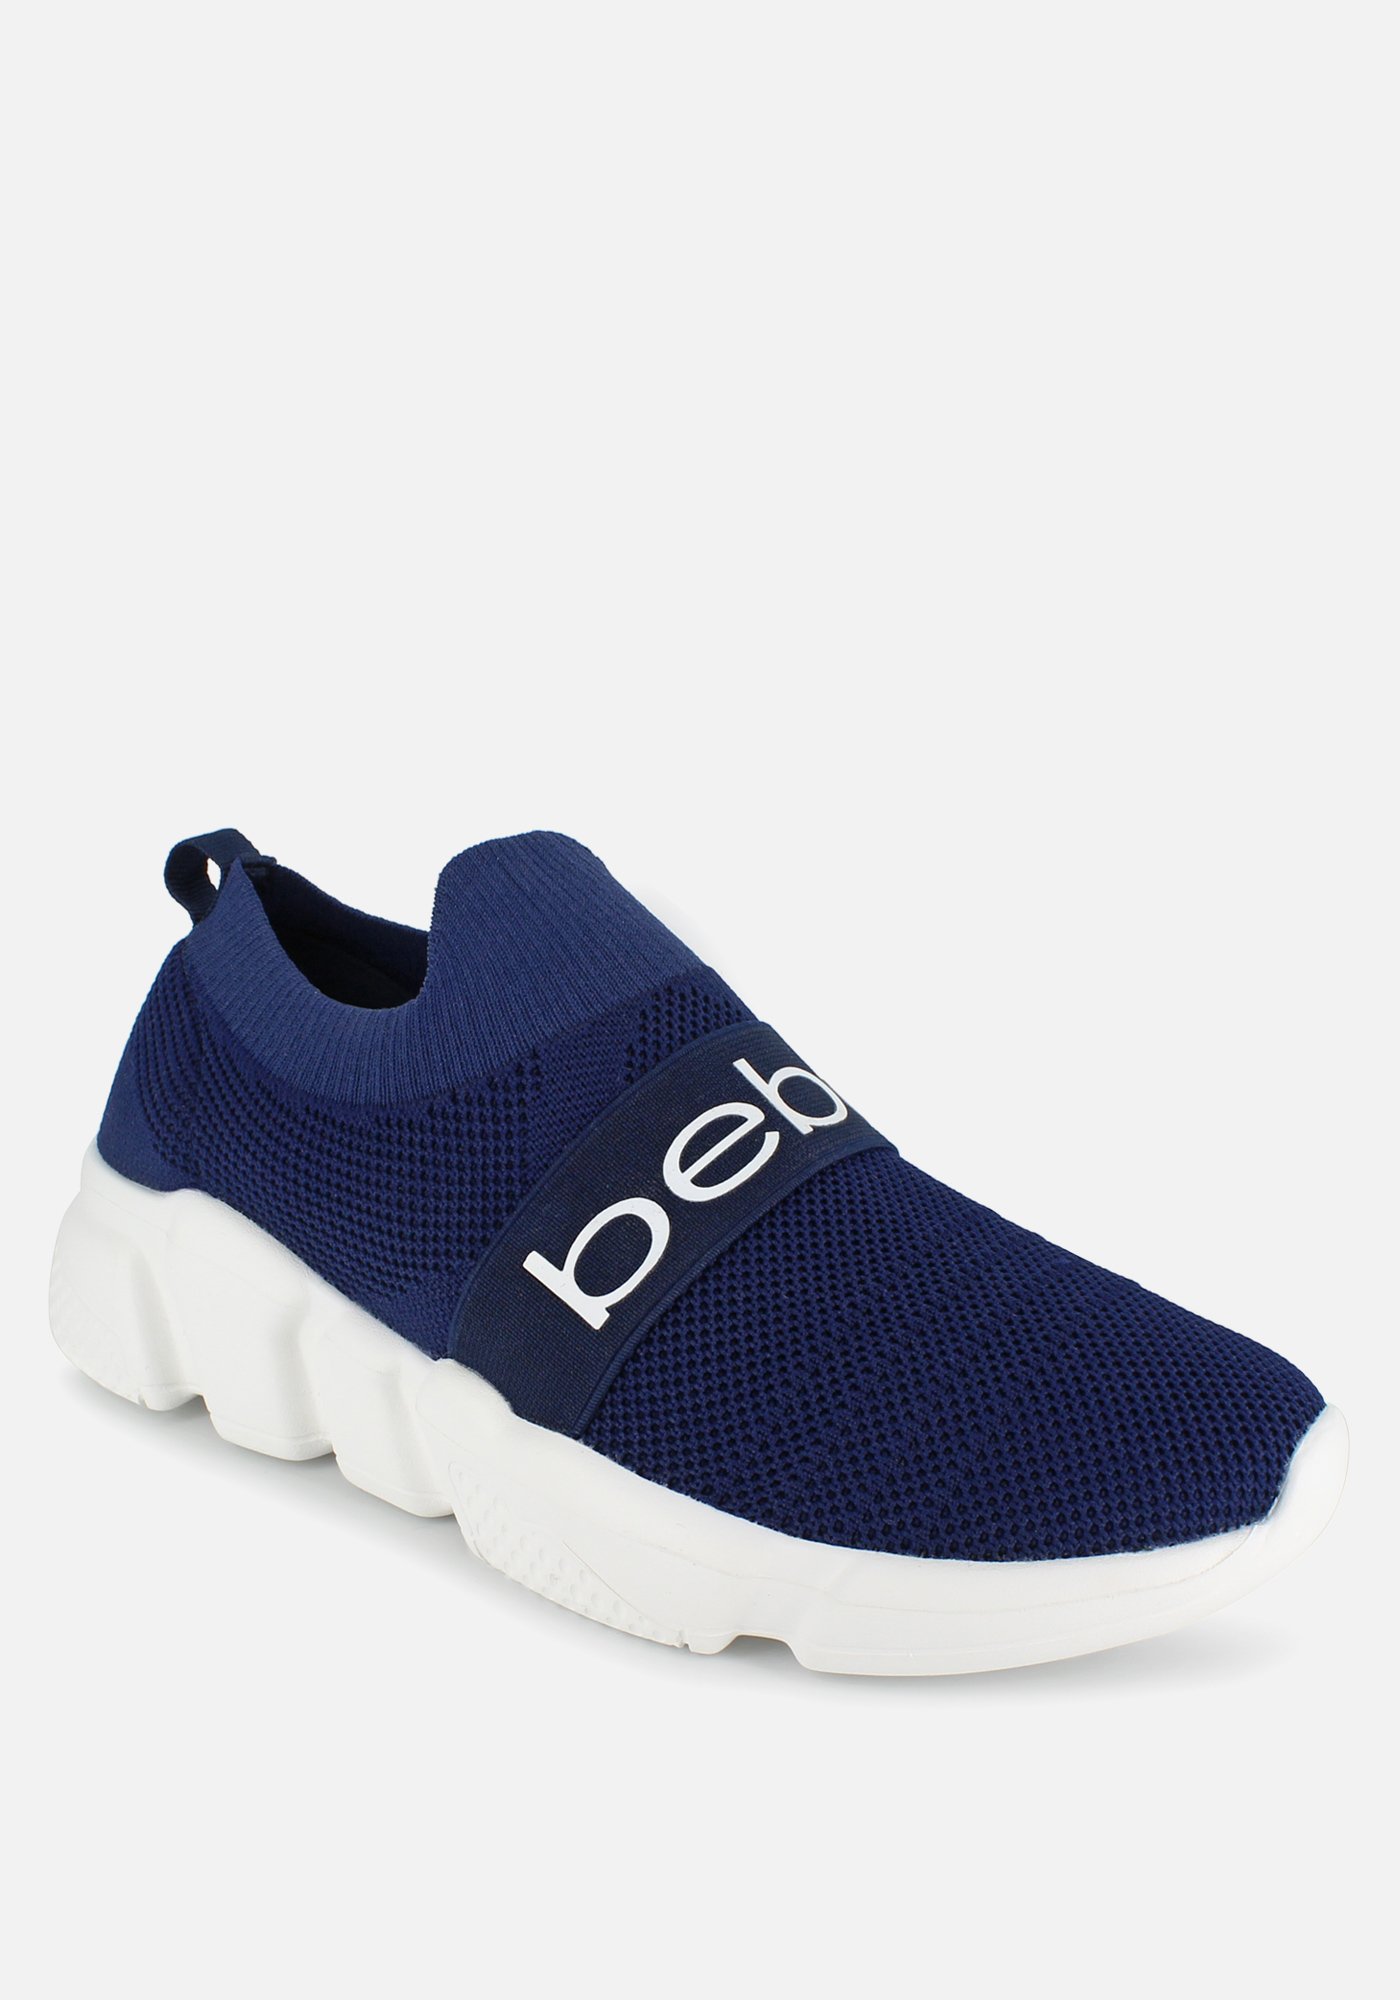 Bebe Women's Aindrea Platform Sneakers, Size 8 in Navy Blue Synthetic